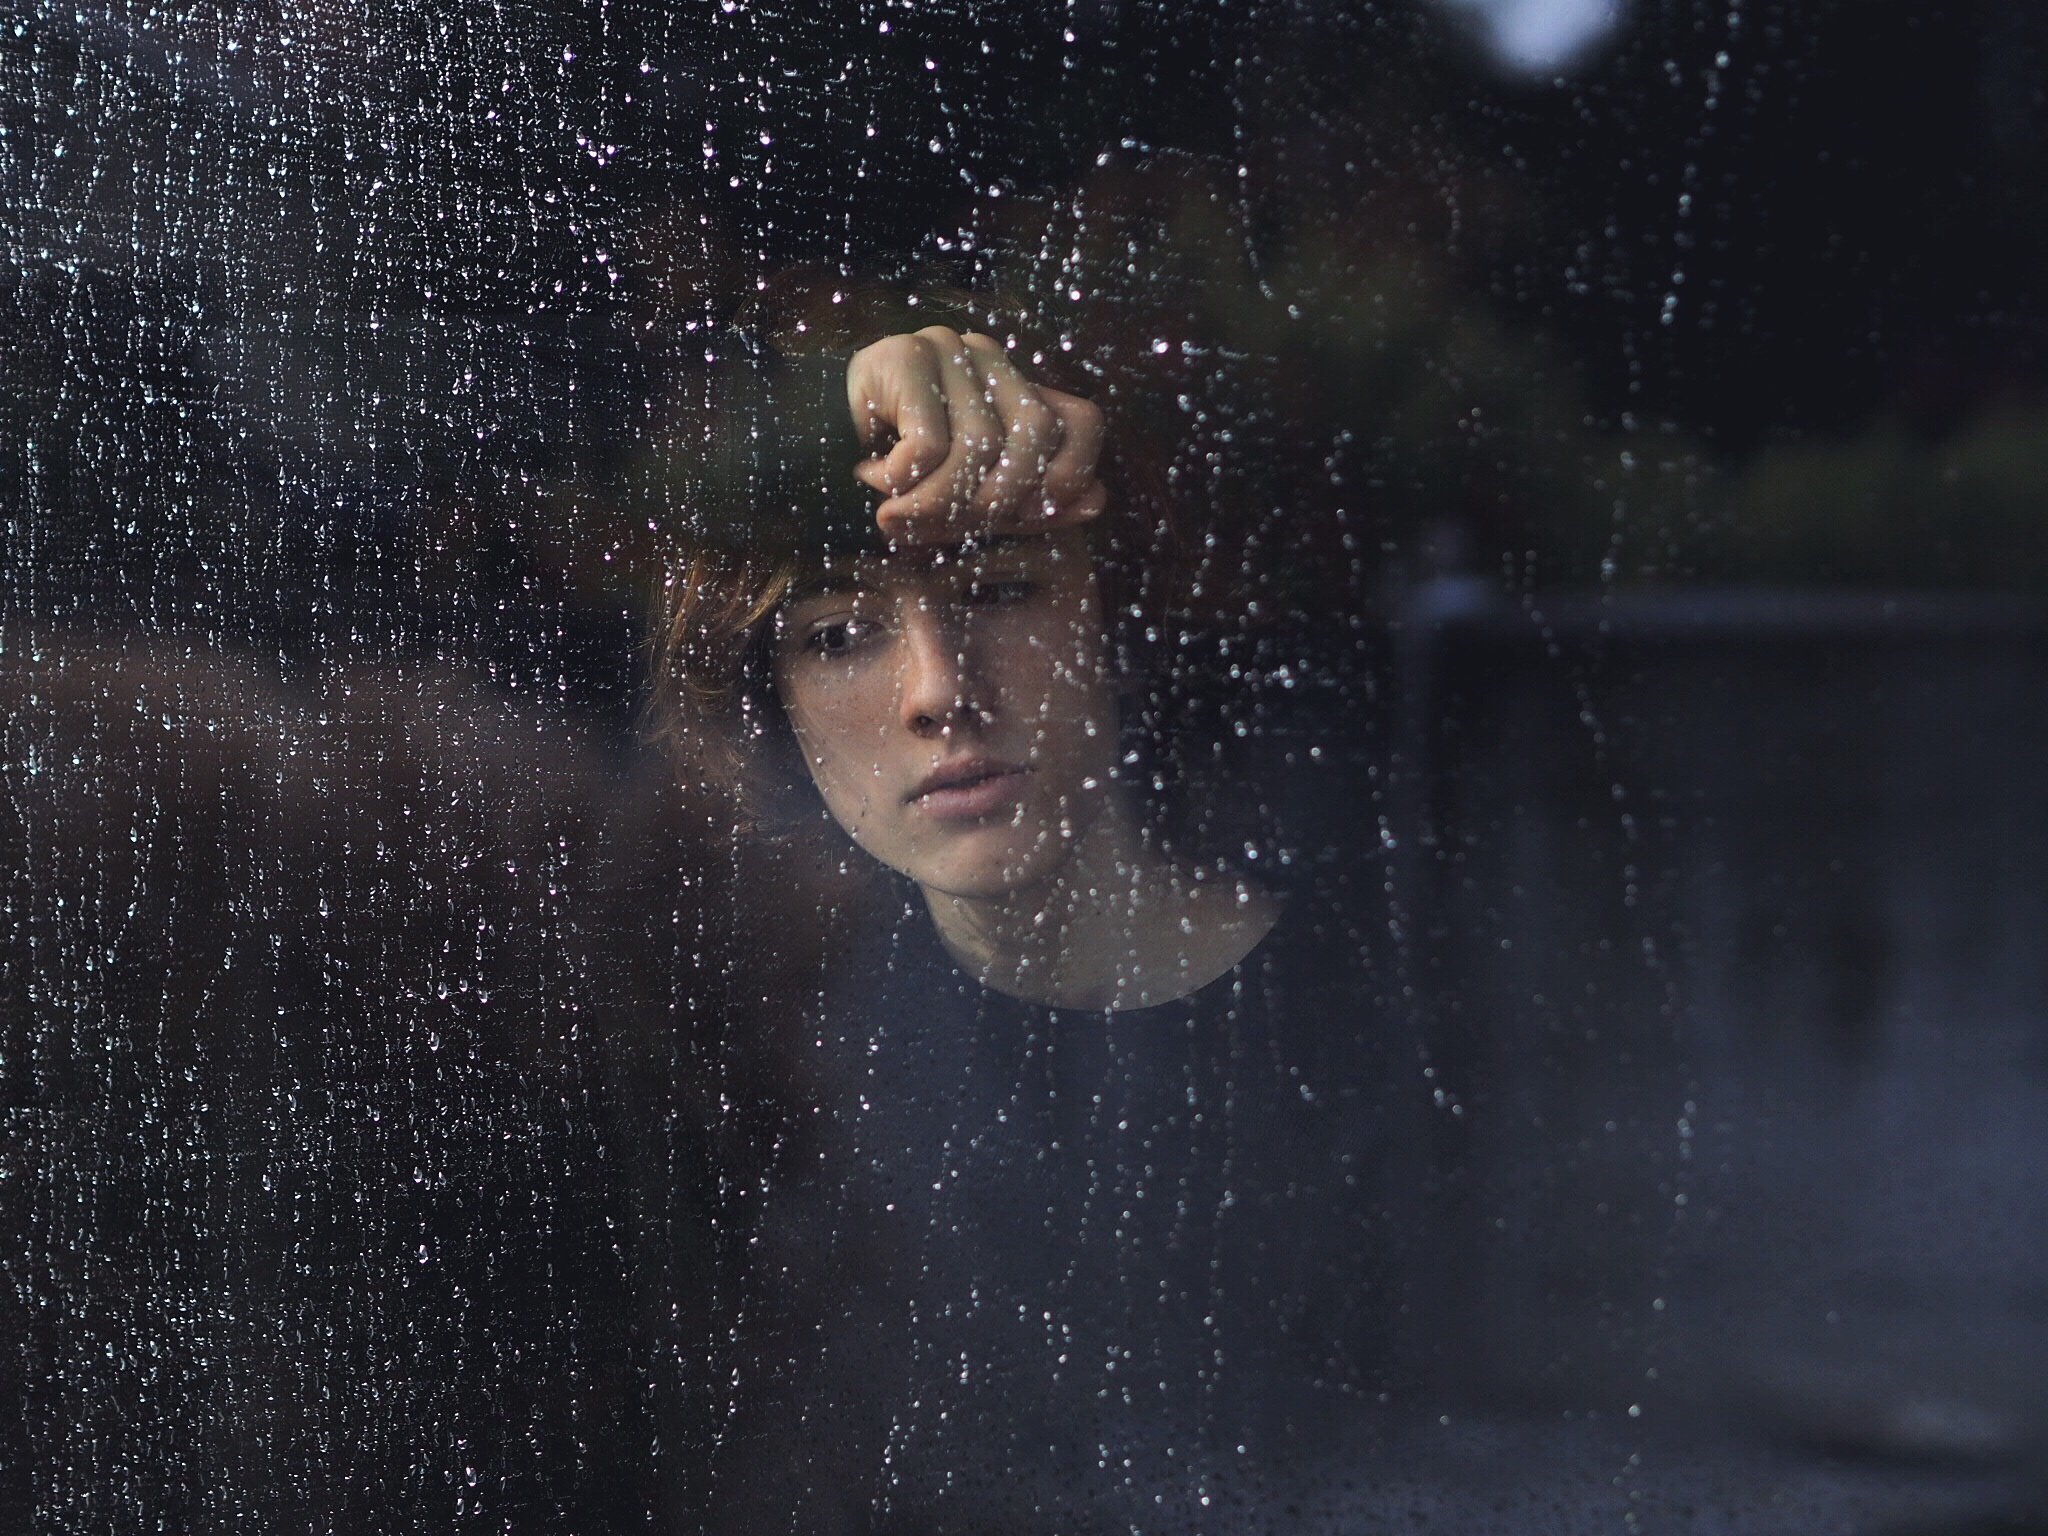 Mulher na janela observando a chuva